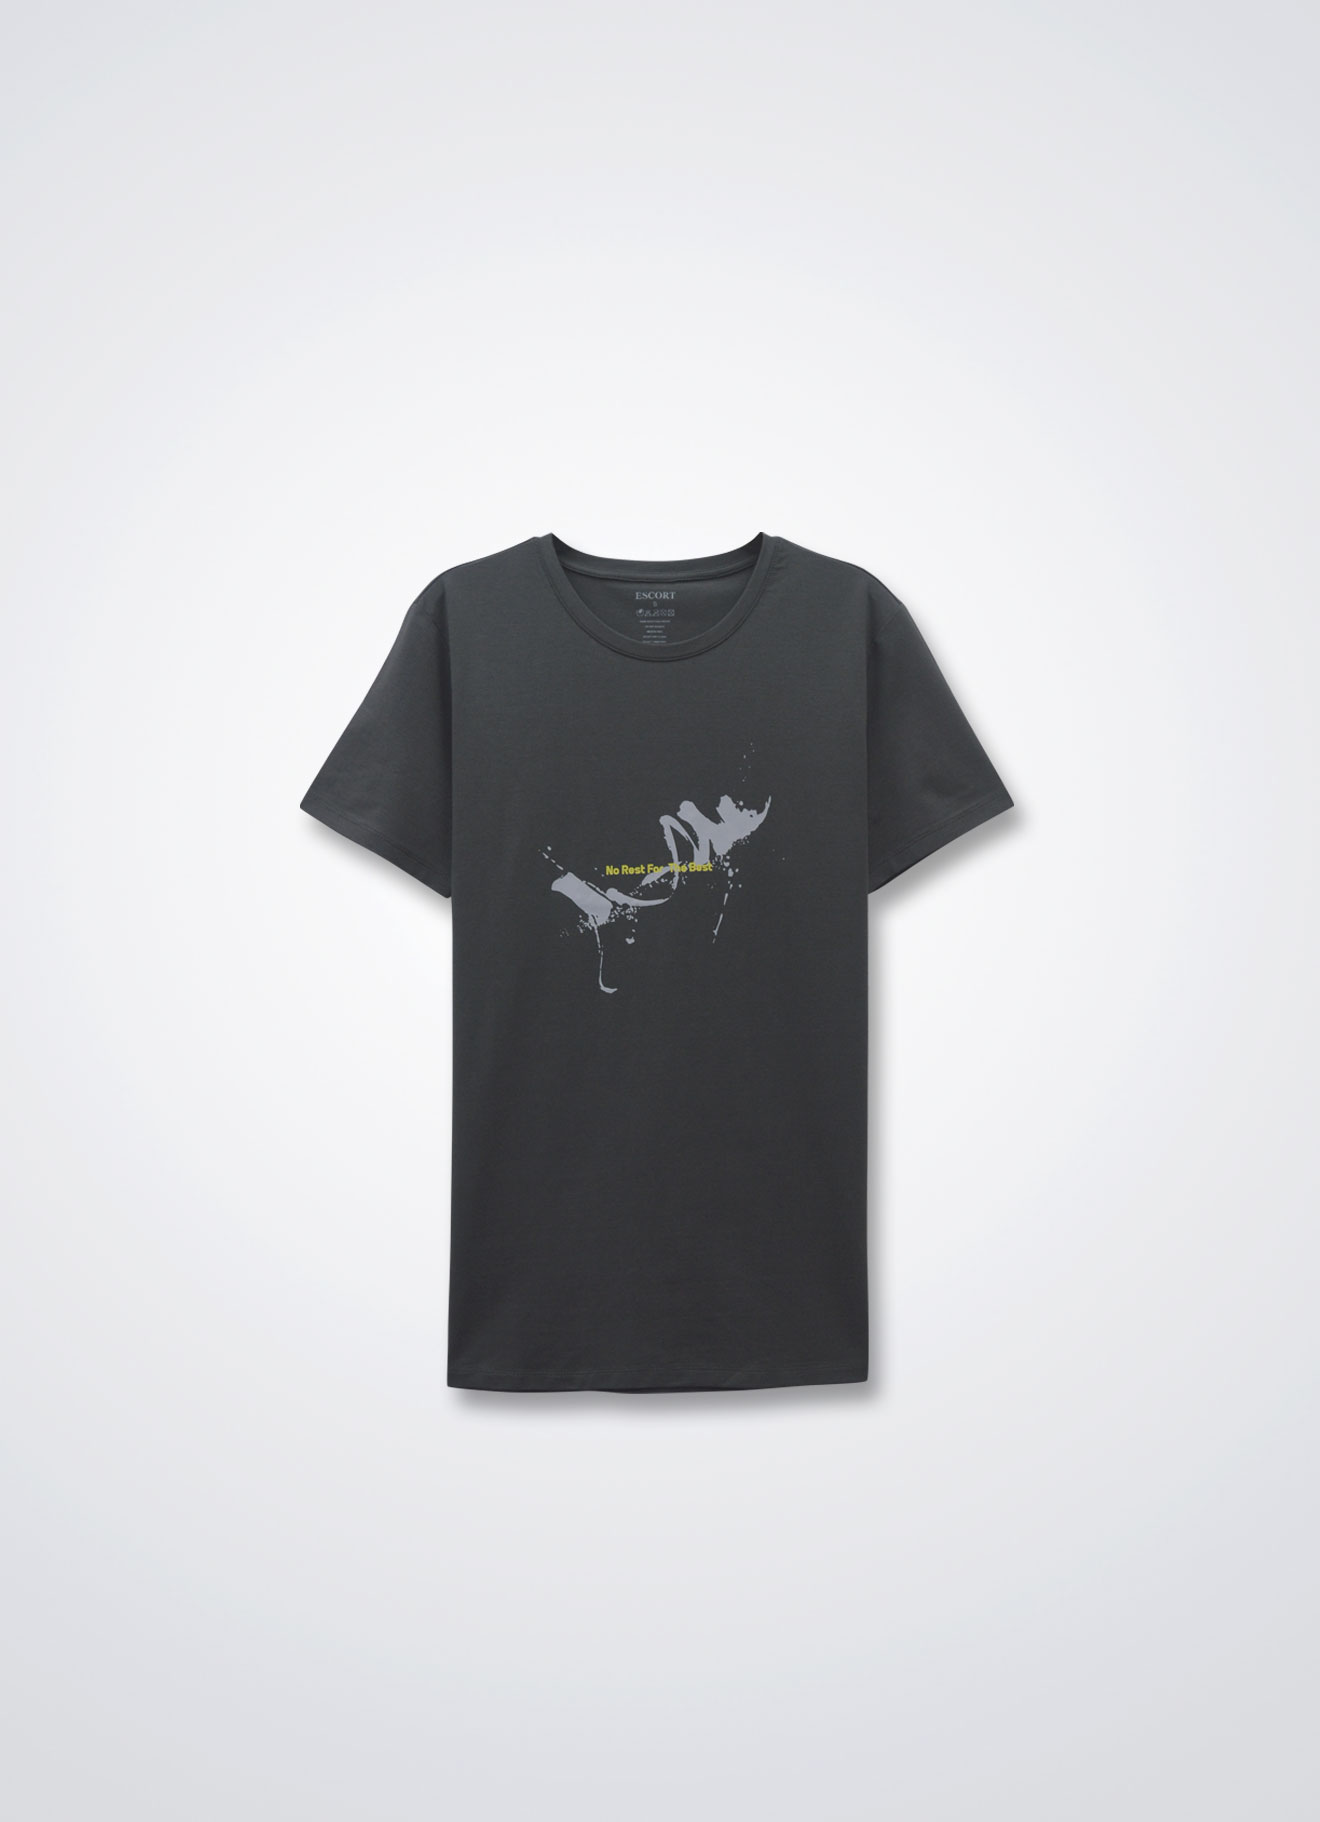 Gargoyle by T-Shirt